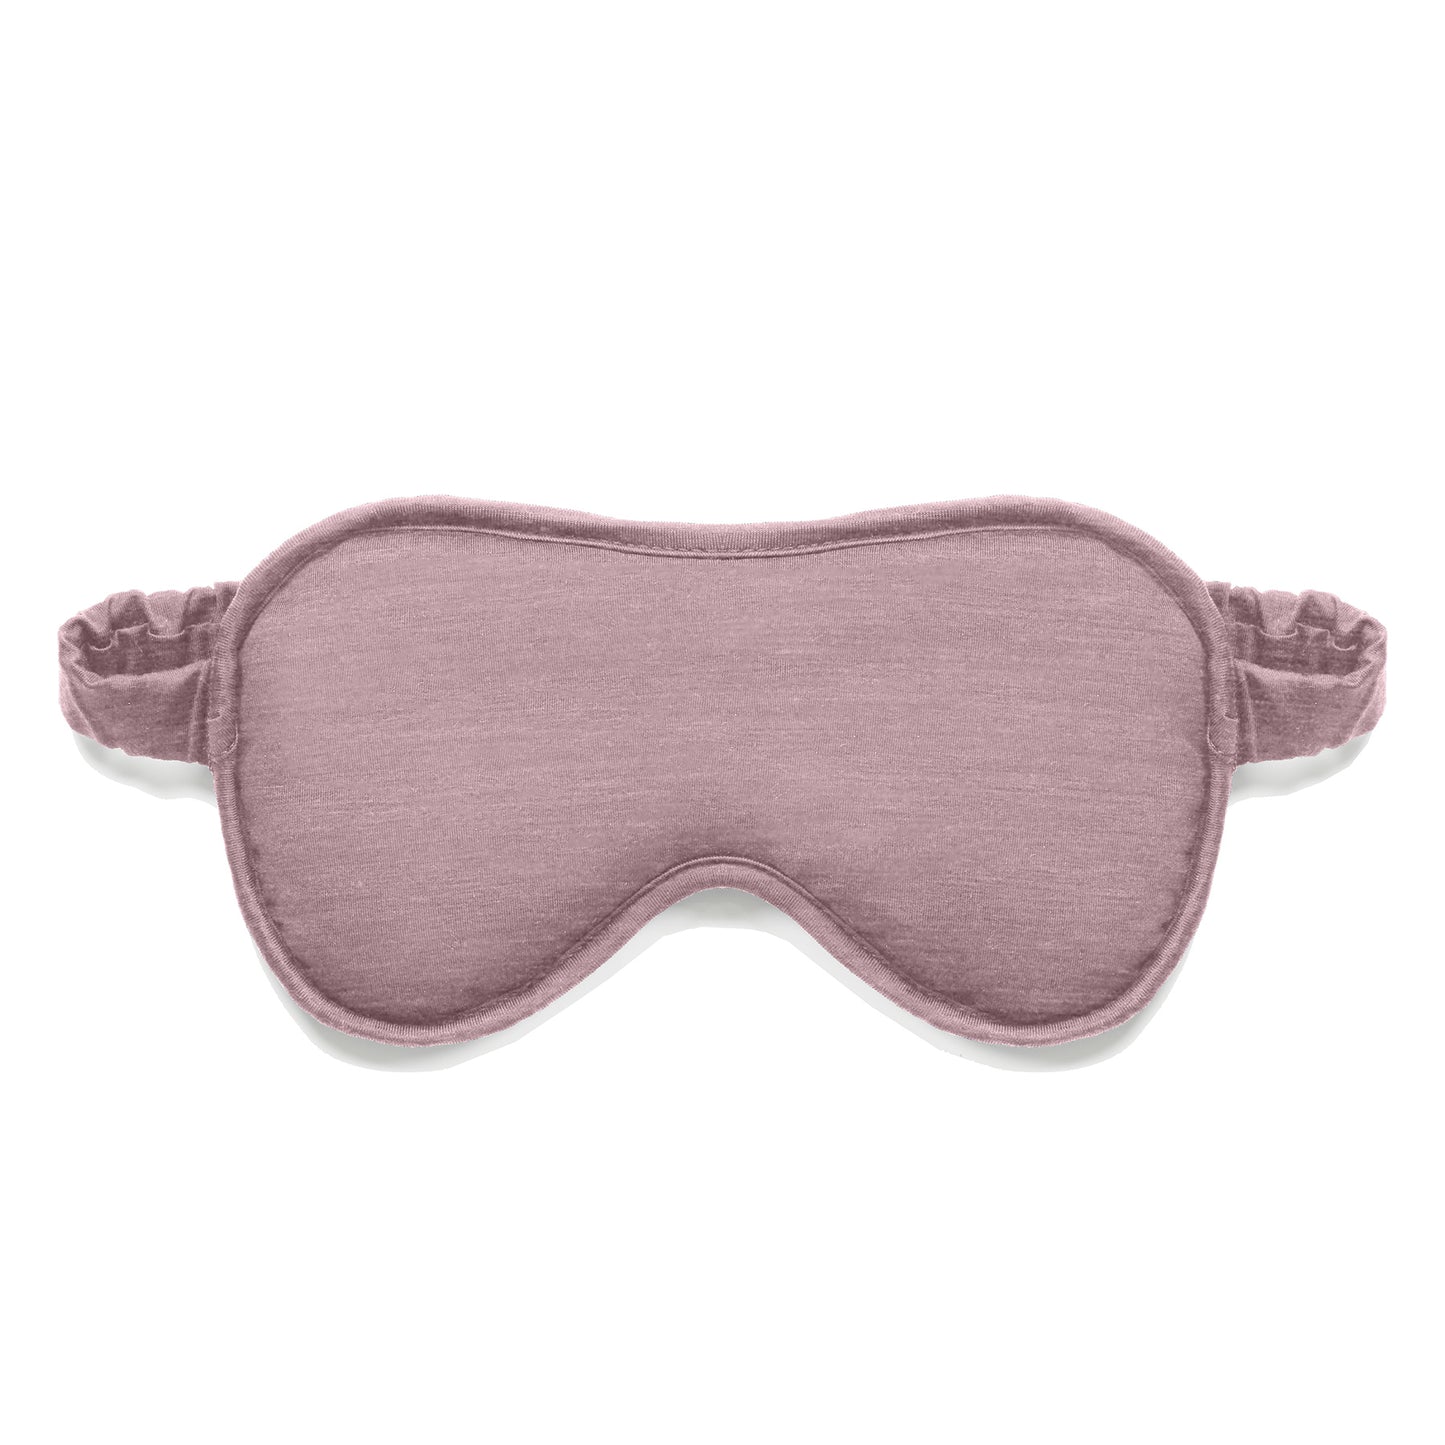 Merino sleep mask || Dusty pink melange